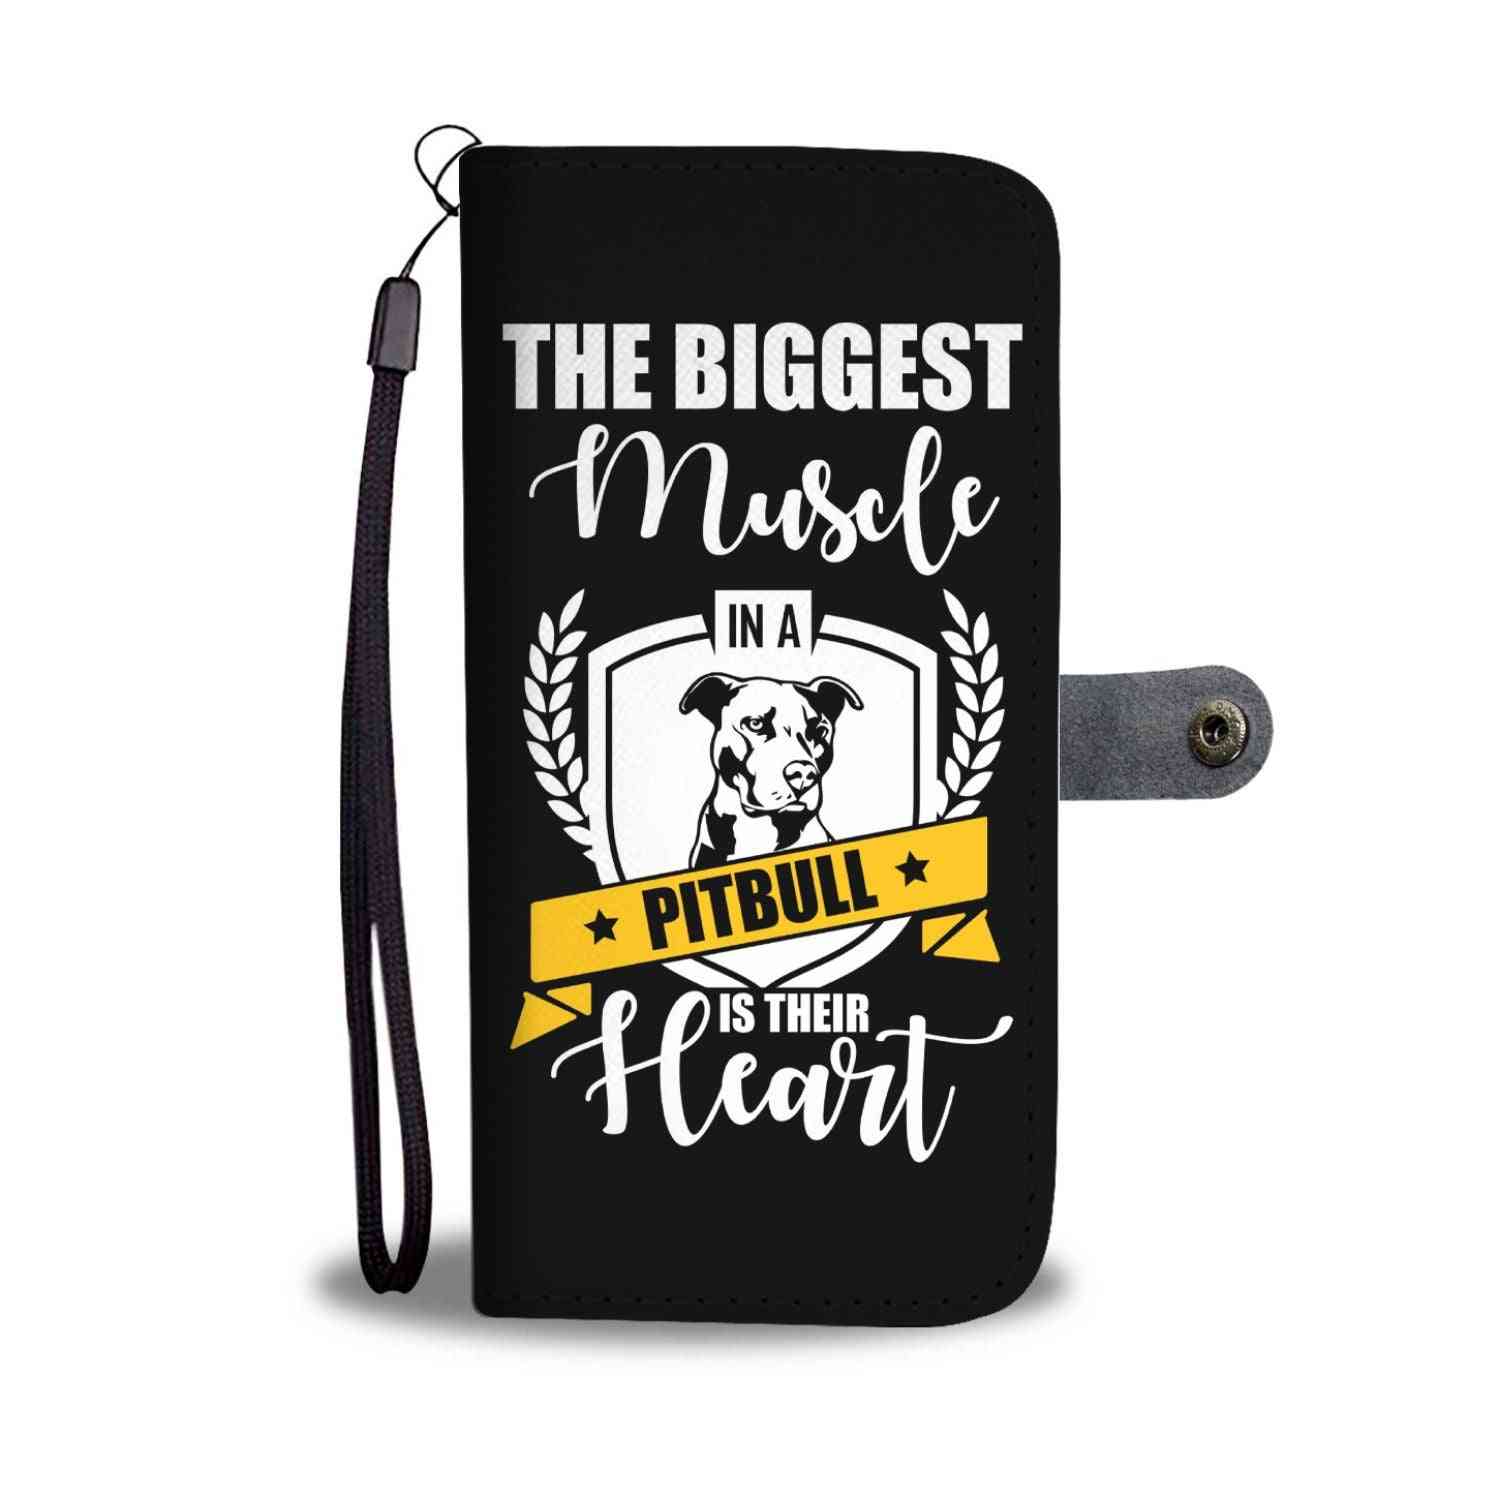 Pitbull Dog Wallet Phone Case W/ Rfid Blocker